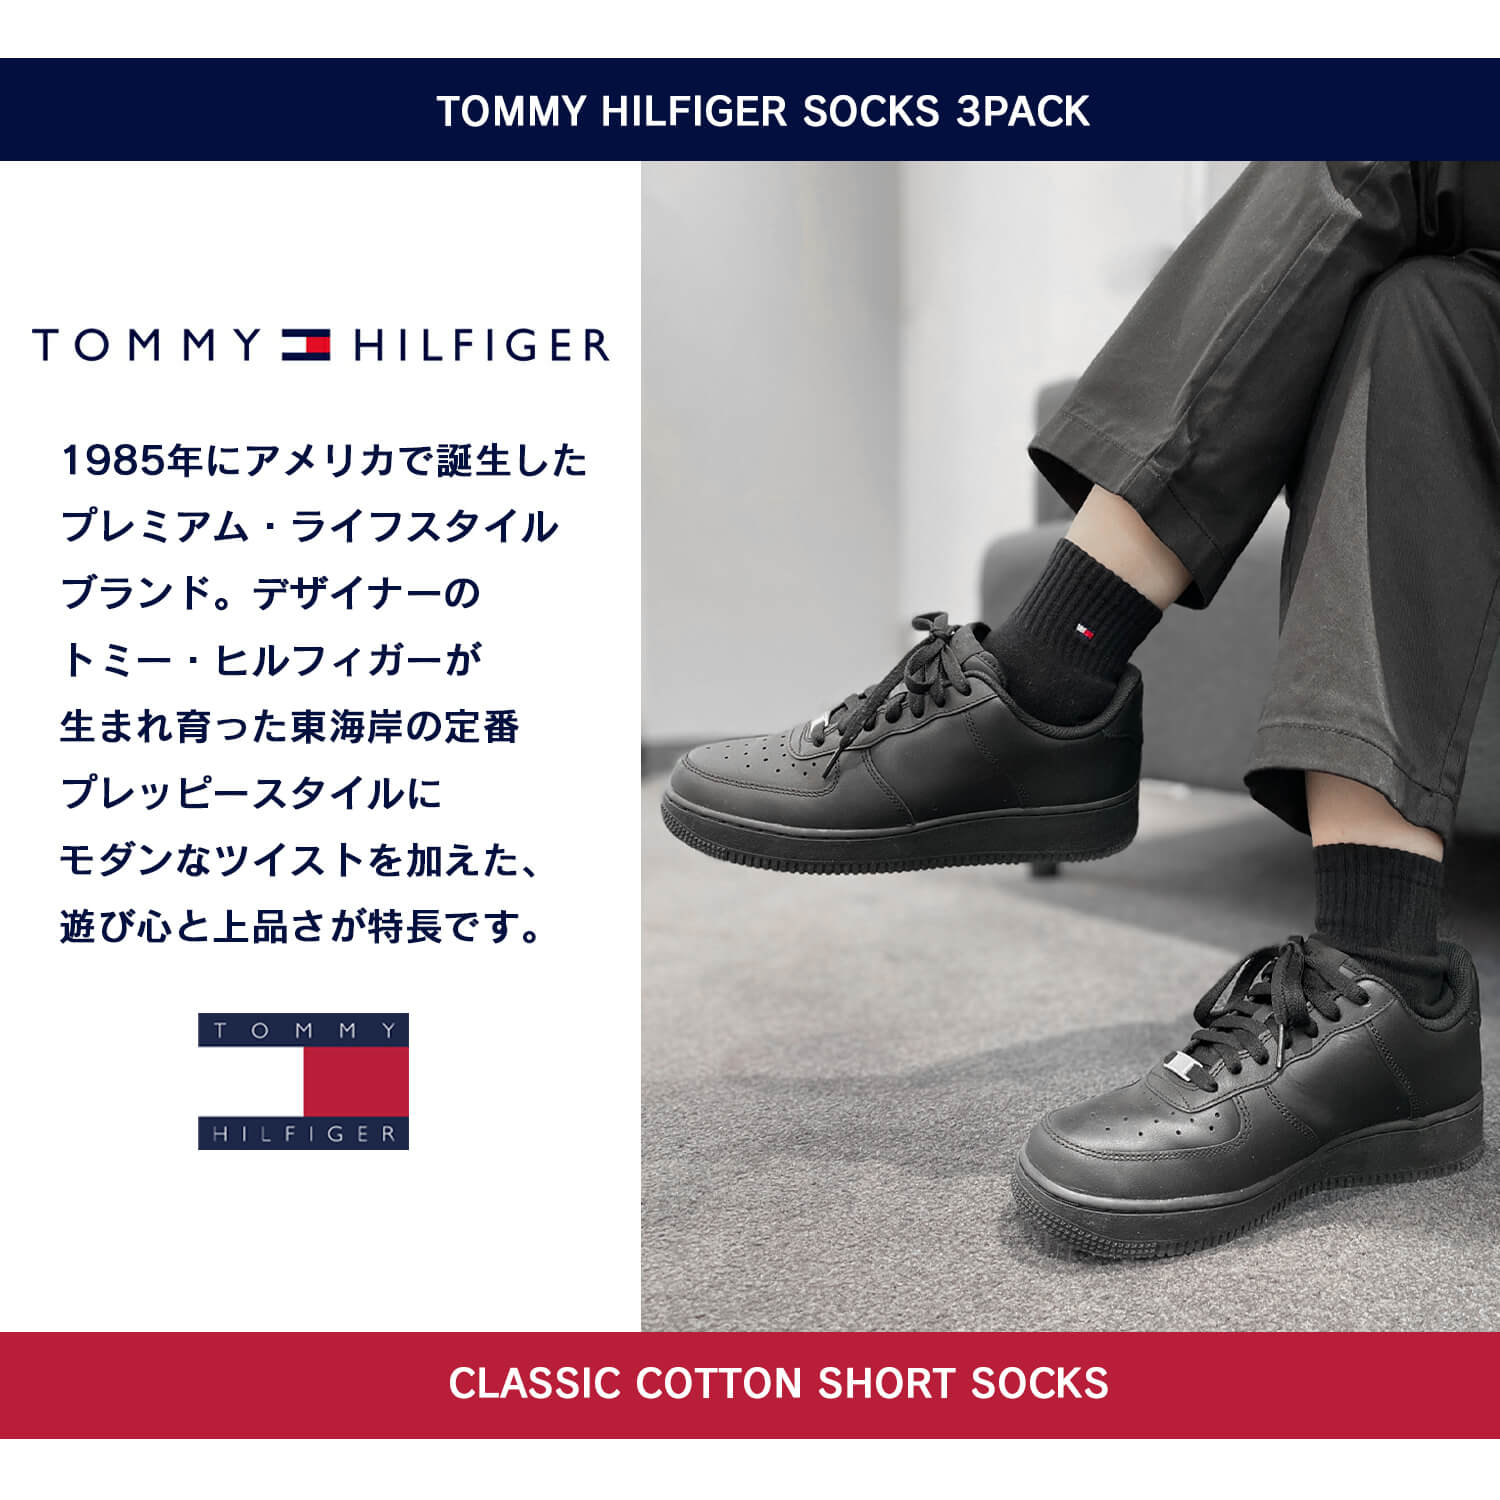 TOMMY HILFIGER Tommy Hilfiger socks men's lady's 3 pairs set 23-25cm 25-27cm short socks anti-bacterial deodorization bottom pie rukarlas